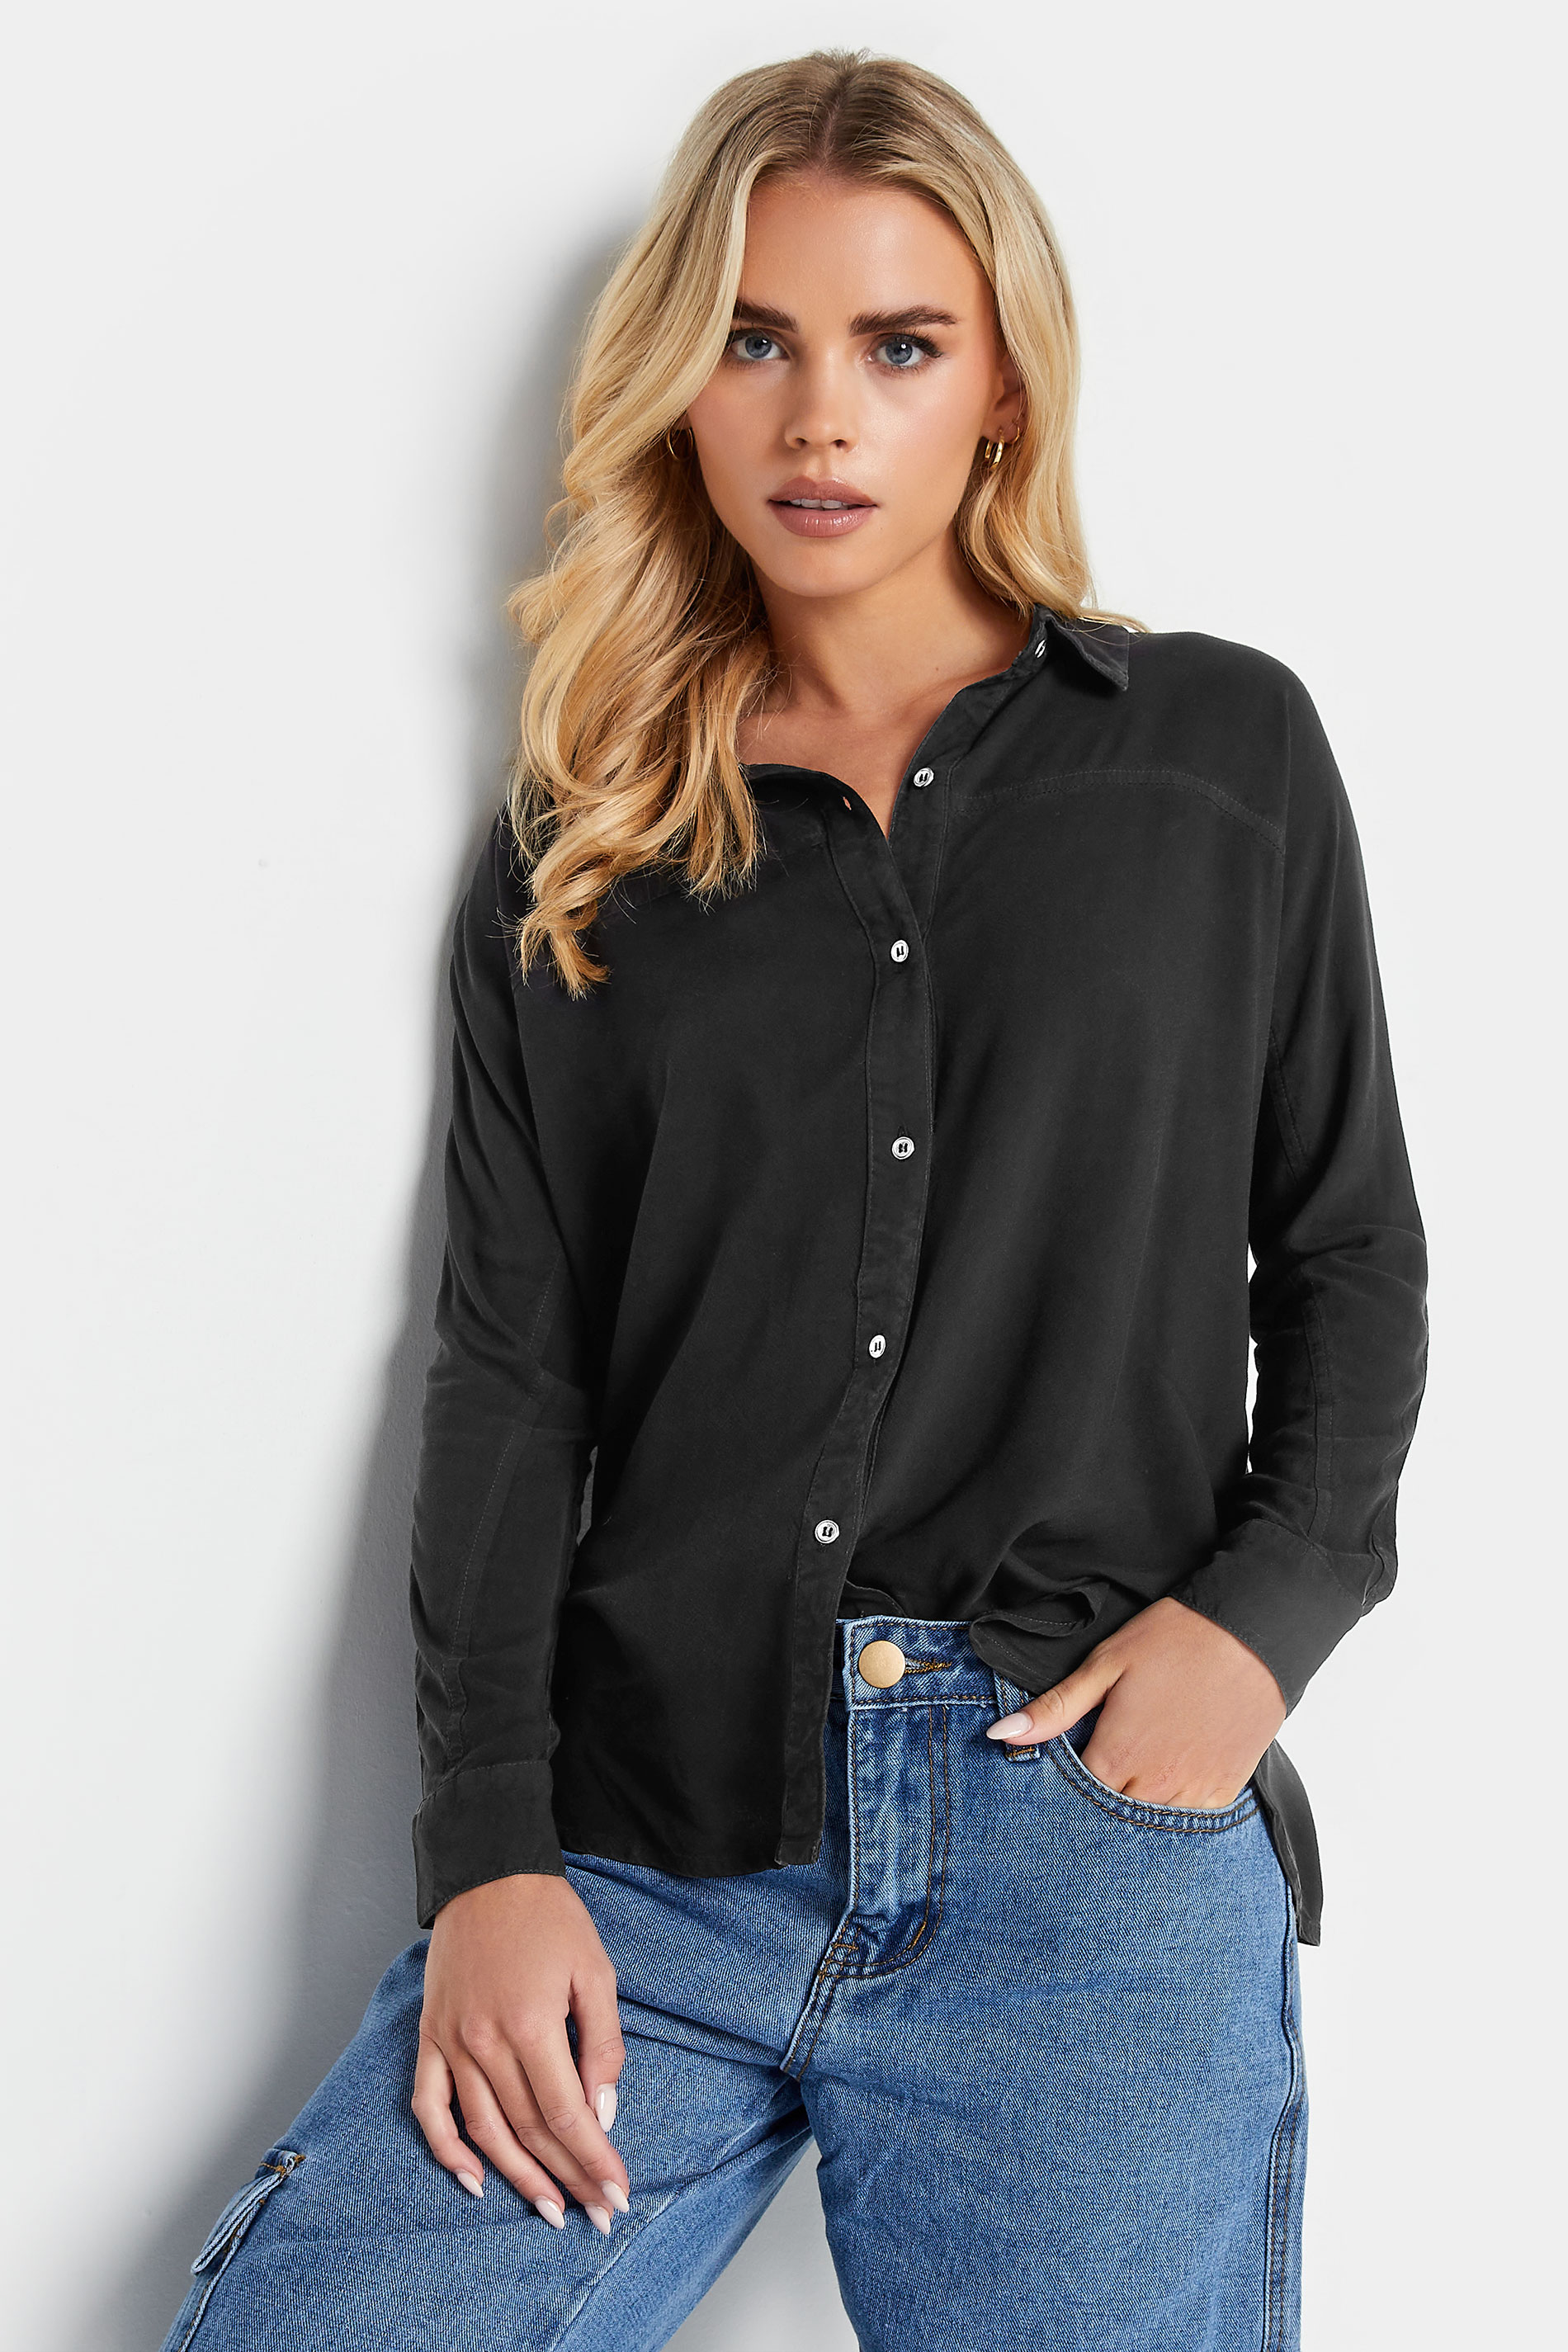 Pixiegirl Black Long Sleeve Shirt 14 Pixiegirl | Petite Women's Shirts product